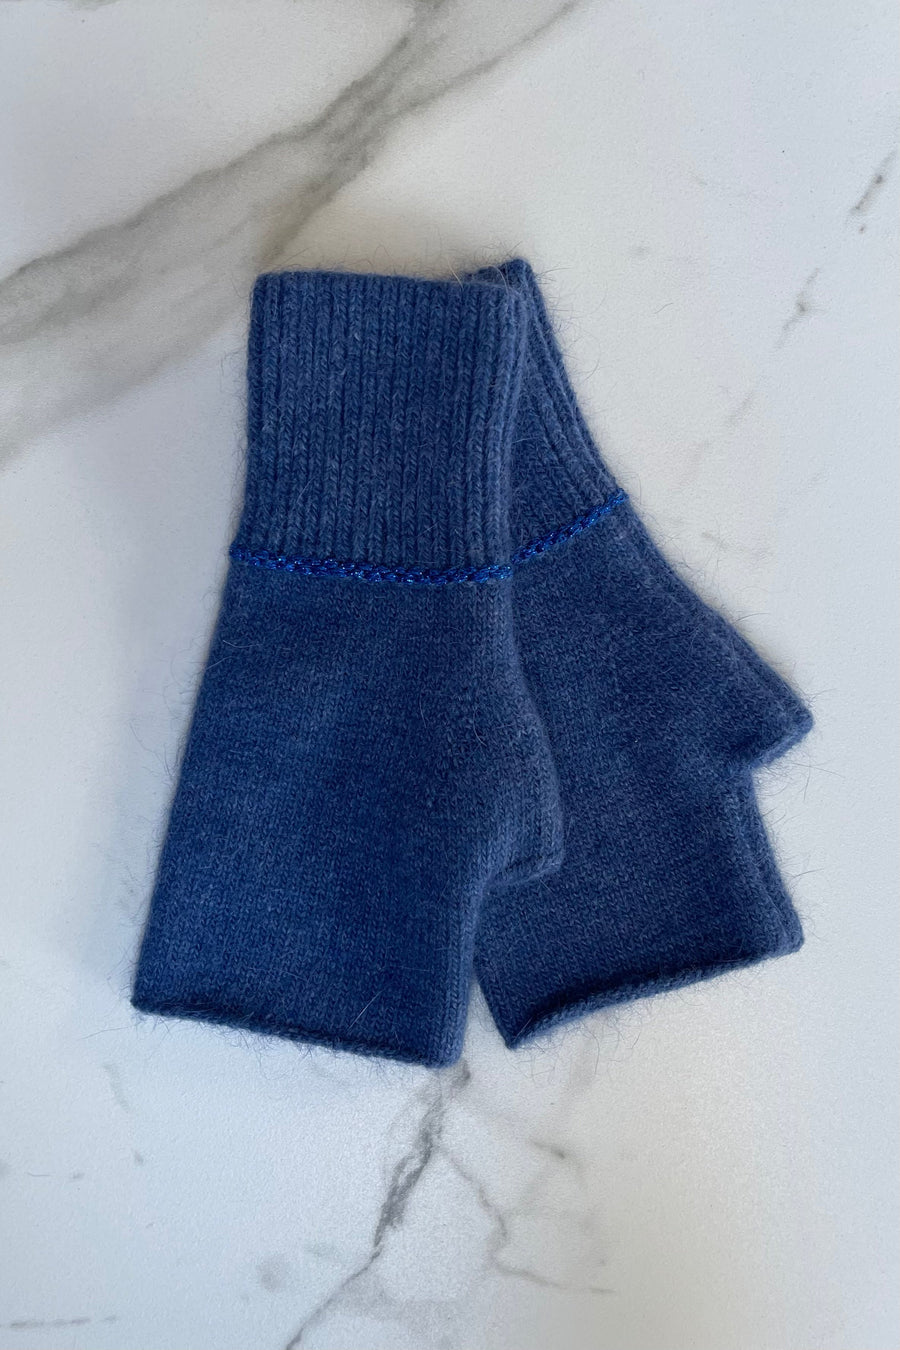 Blue cashmere mittens, fingerless gloves 